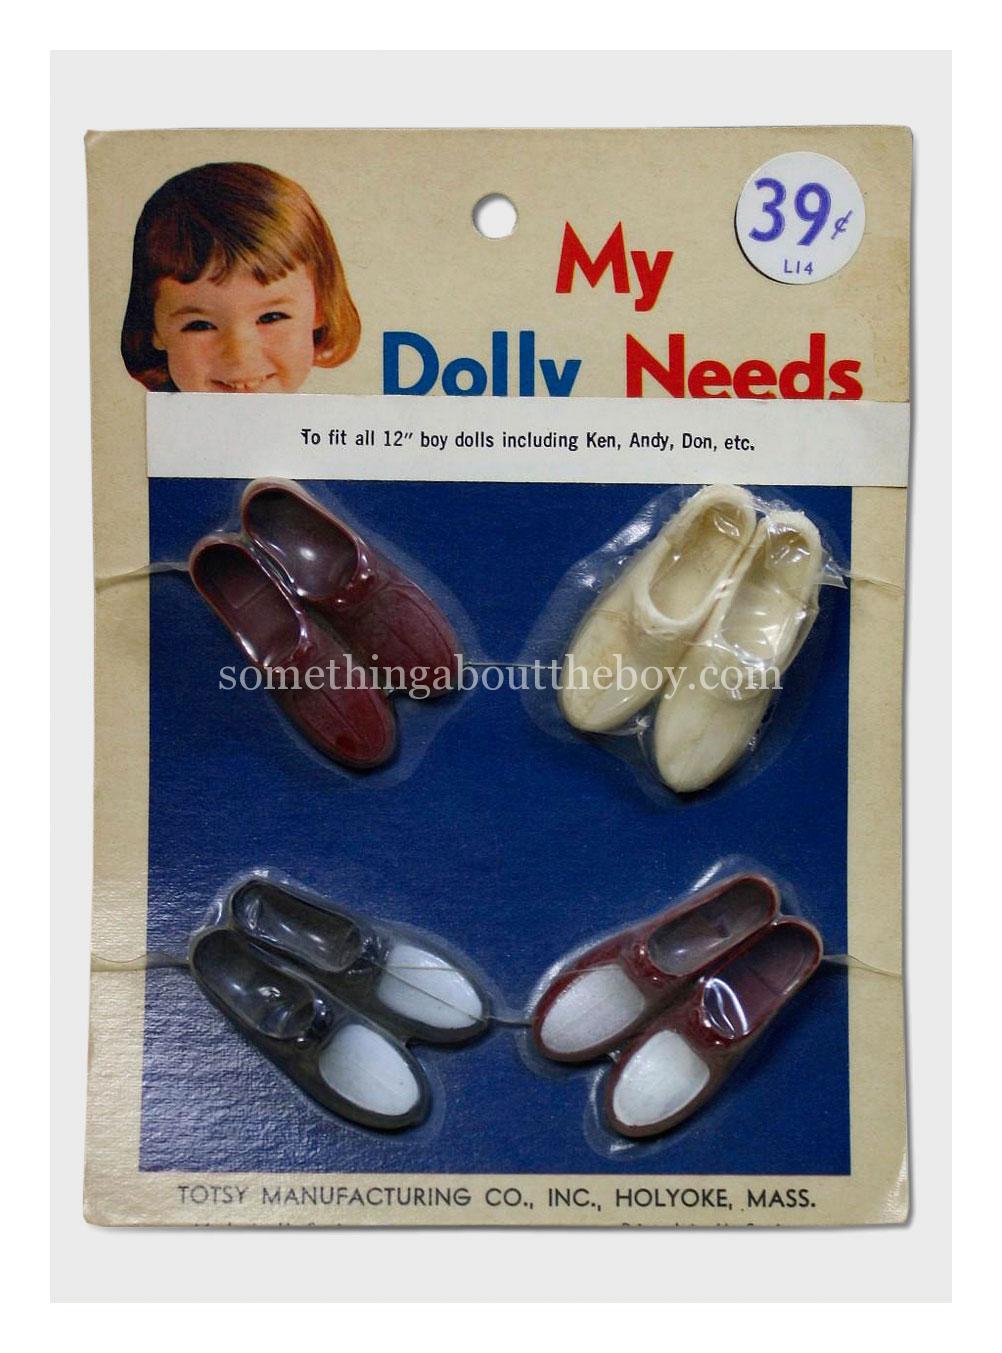 My Dolly Needs shoe set by Totsy